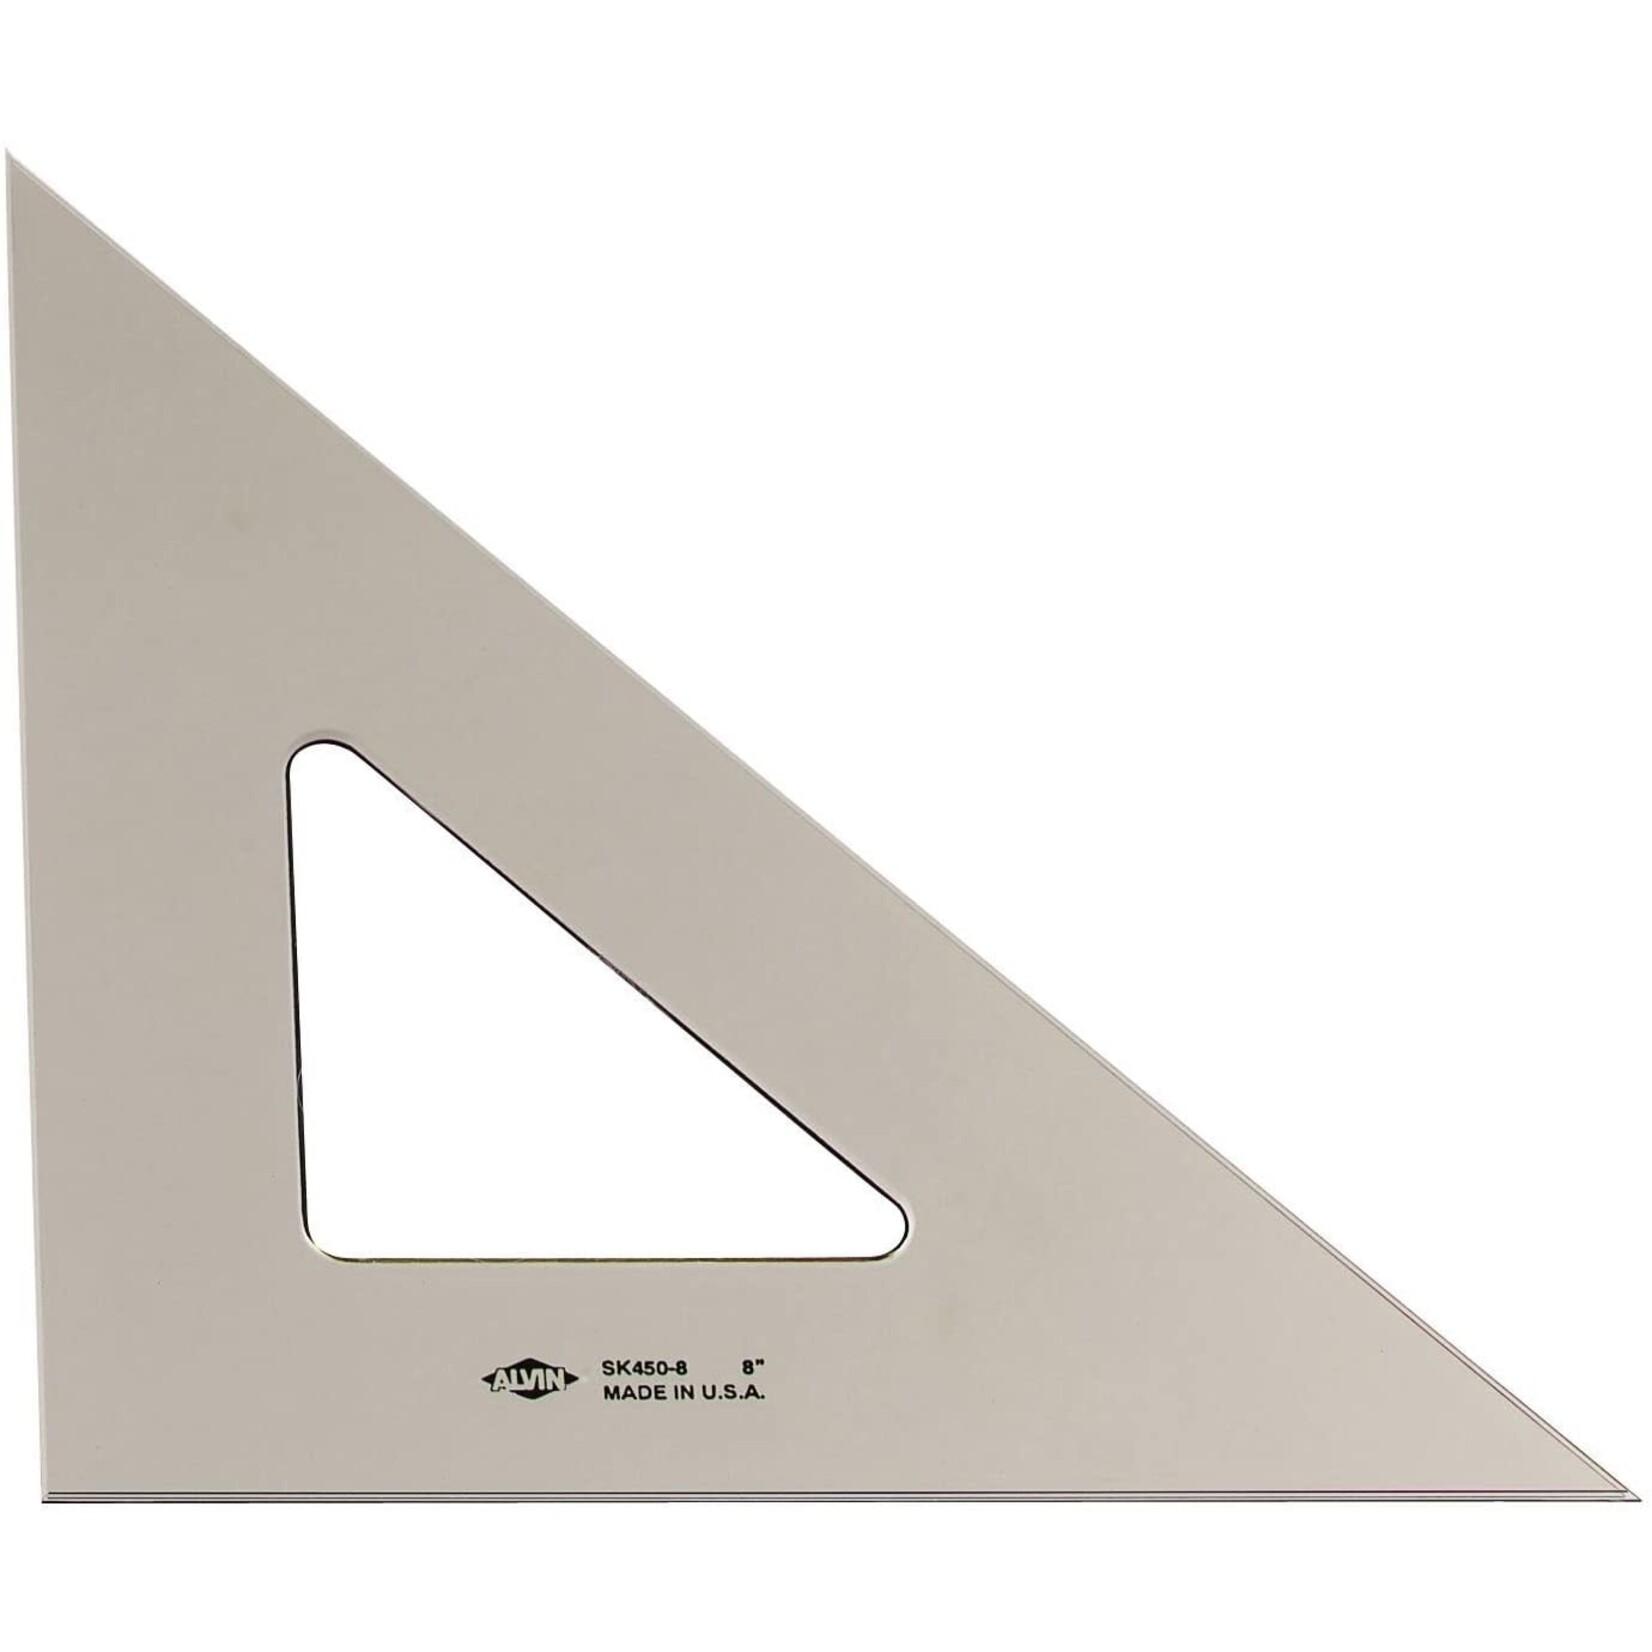 Alvin 8'' Smoke-Tint Triangle 45/90